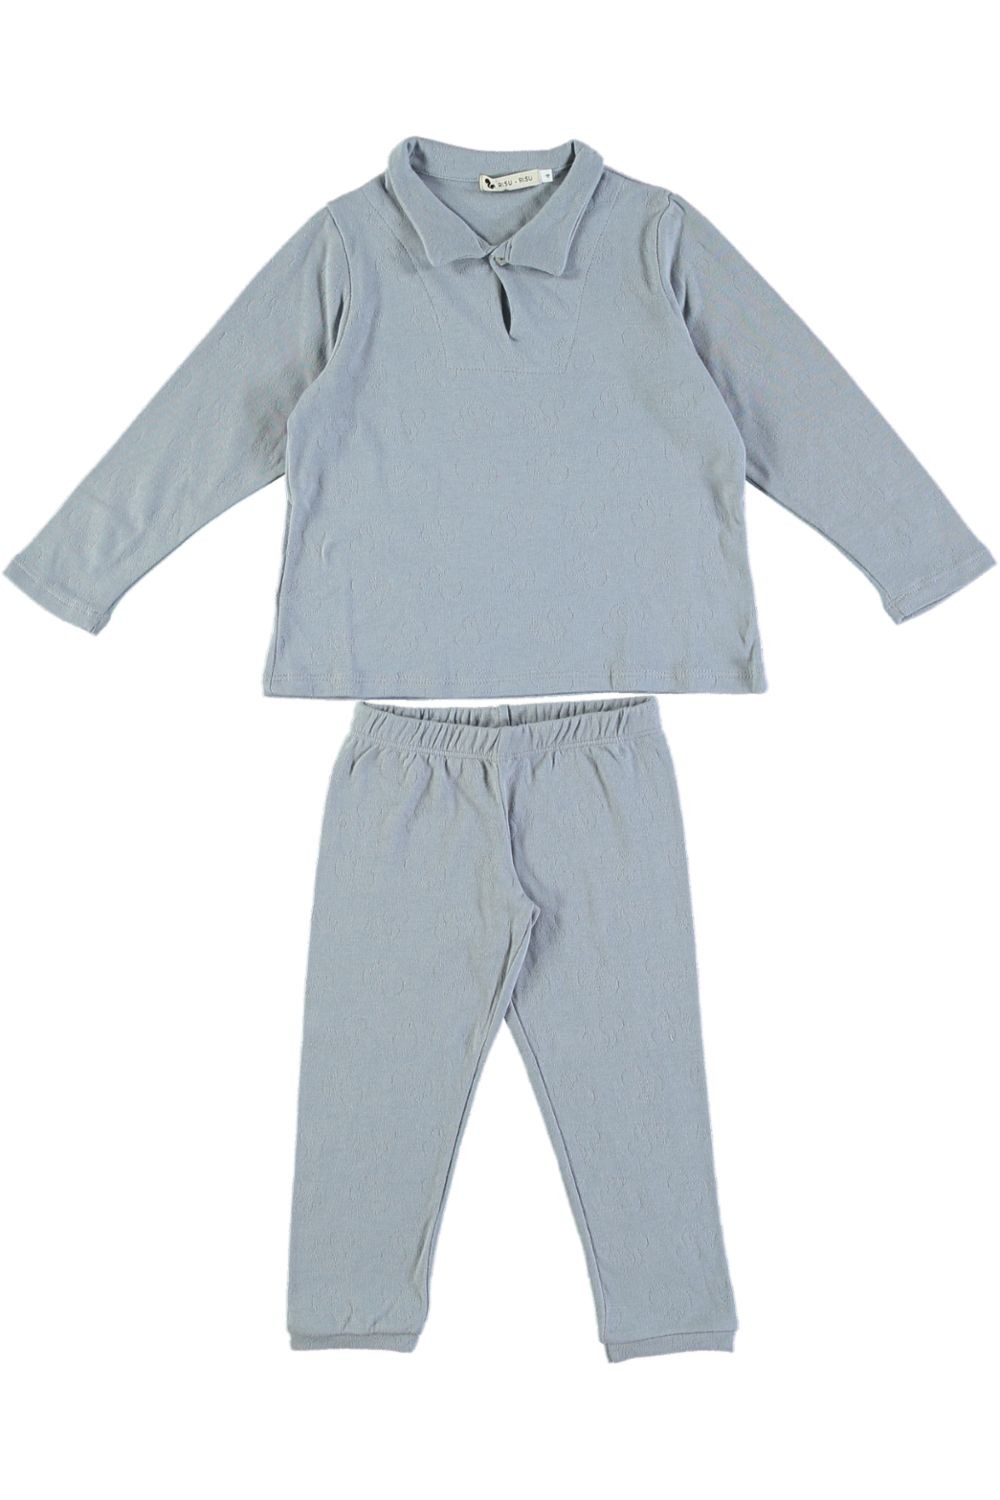 Nino children's blue pyjamas